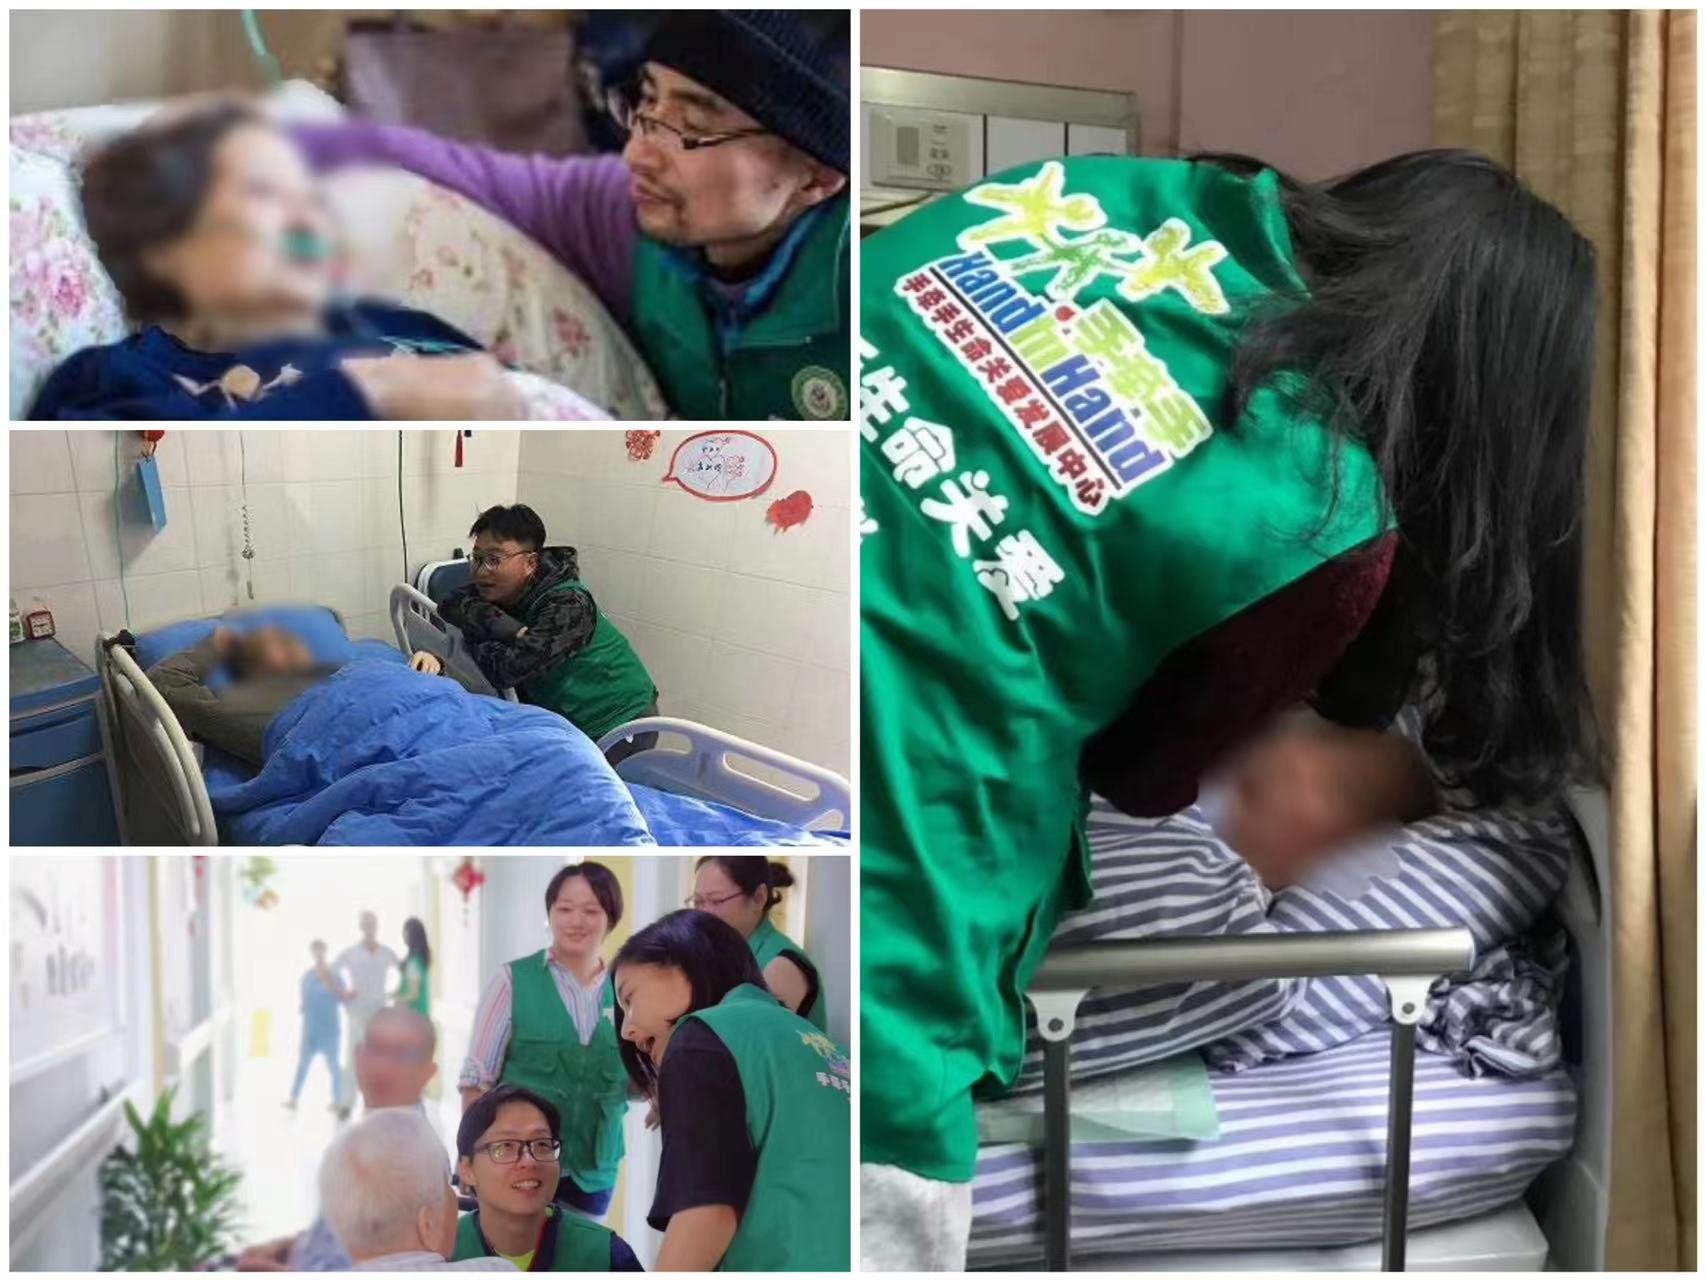 Zhou Yan: The 手牵手 [Shǒuqiānshǒu] organisation sends volunteers like her to hospice units within hospitals across China. (1)